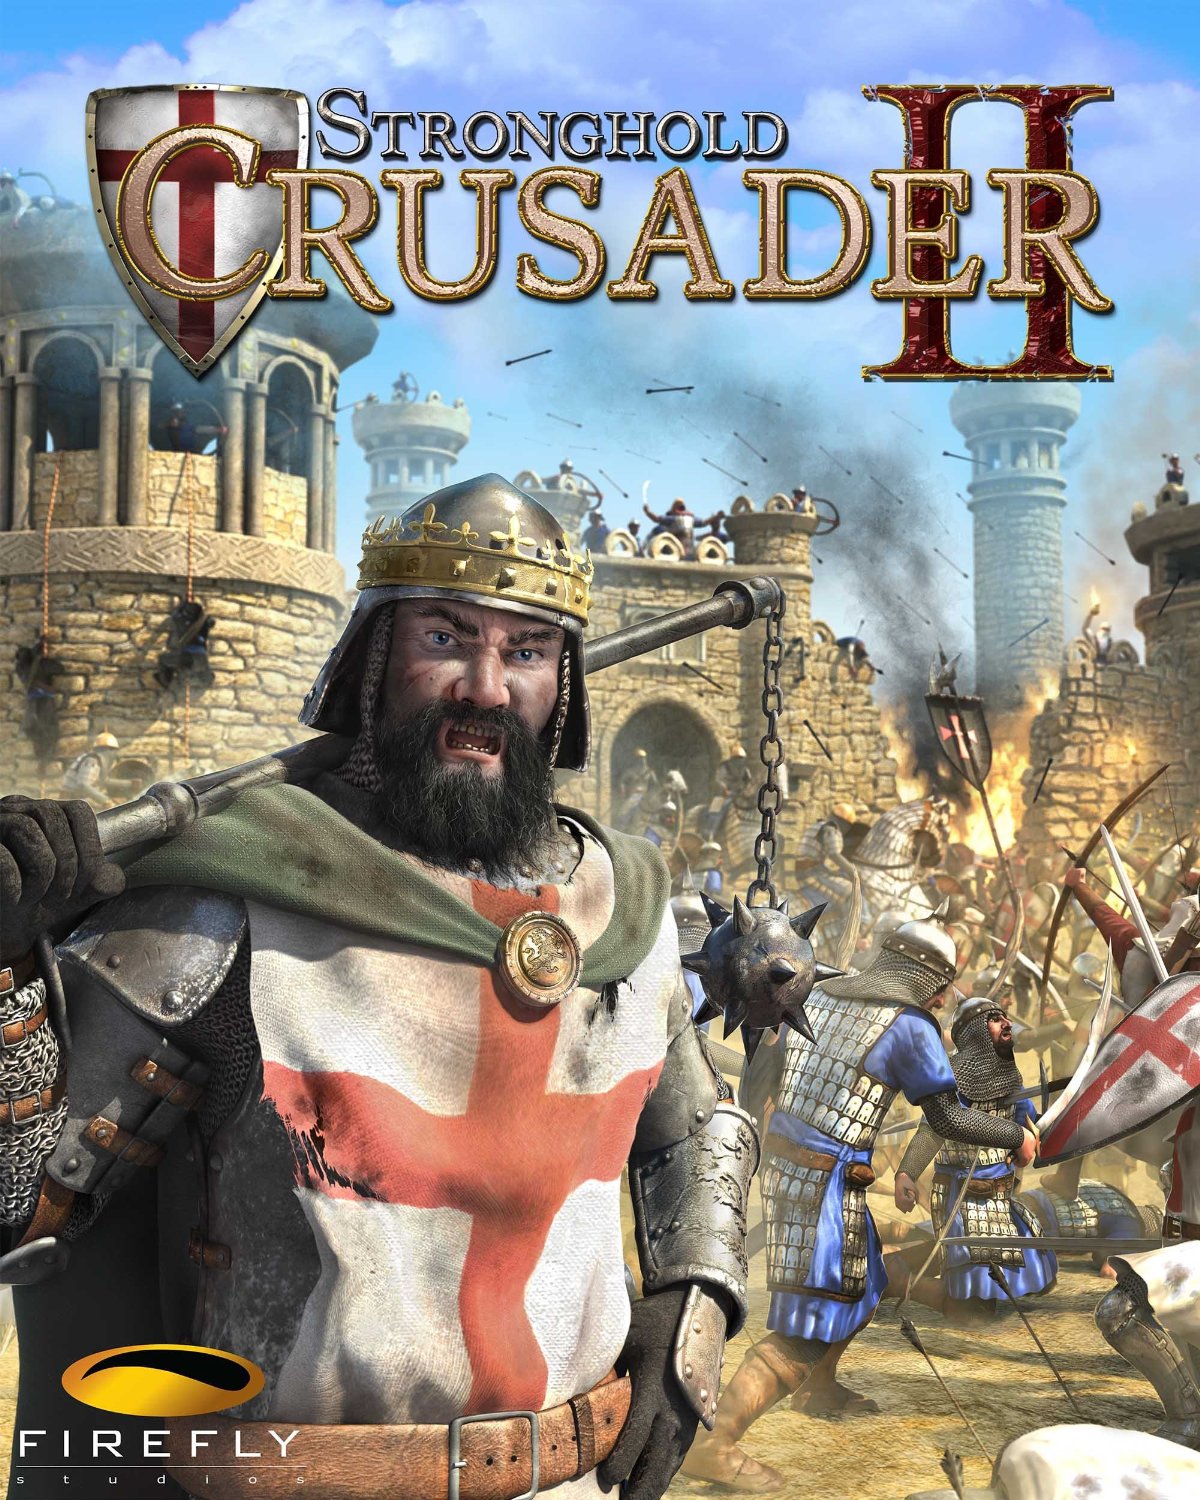 Stronghold crusader hd download free